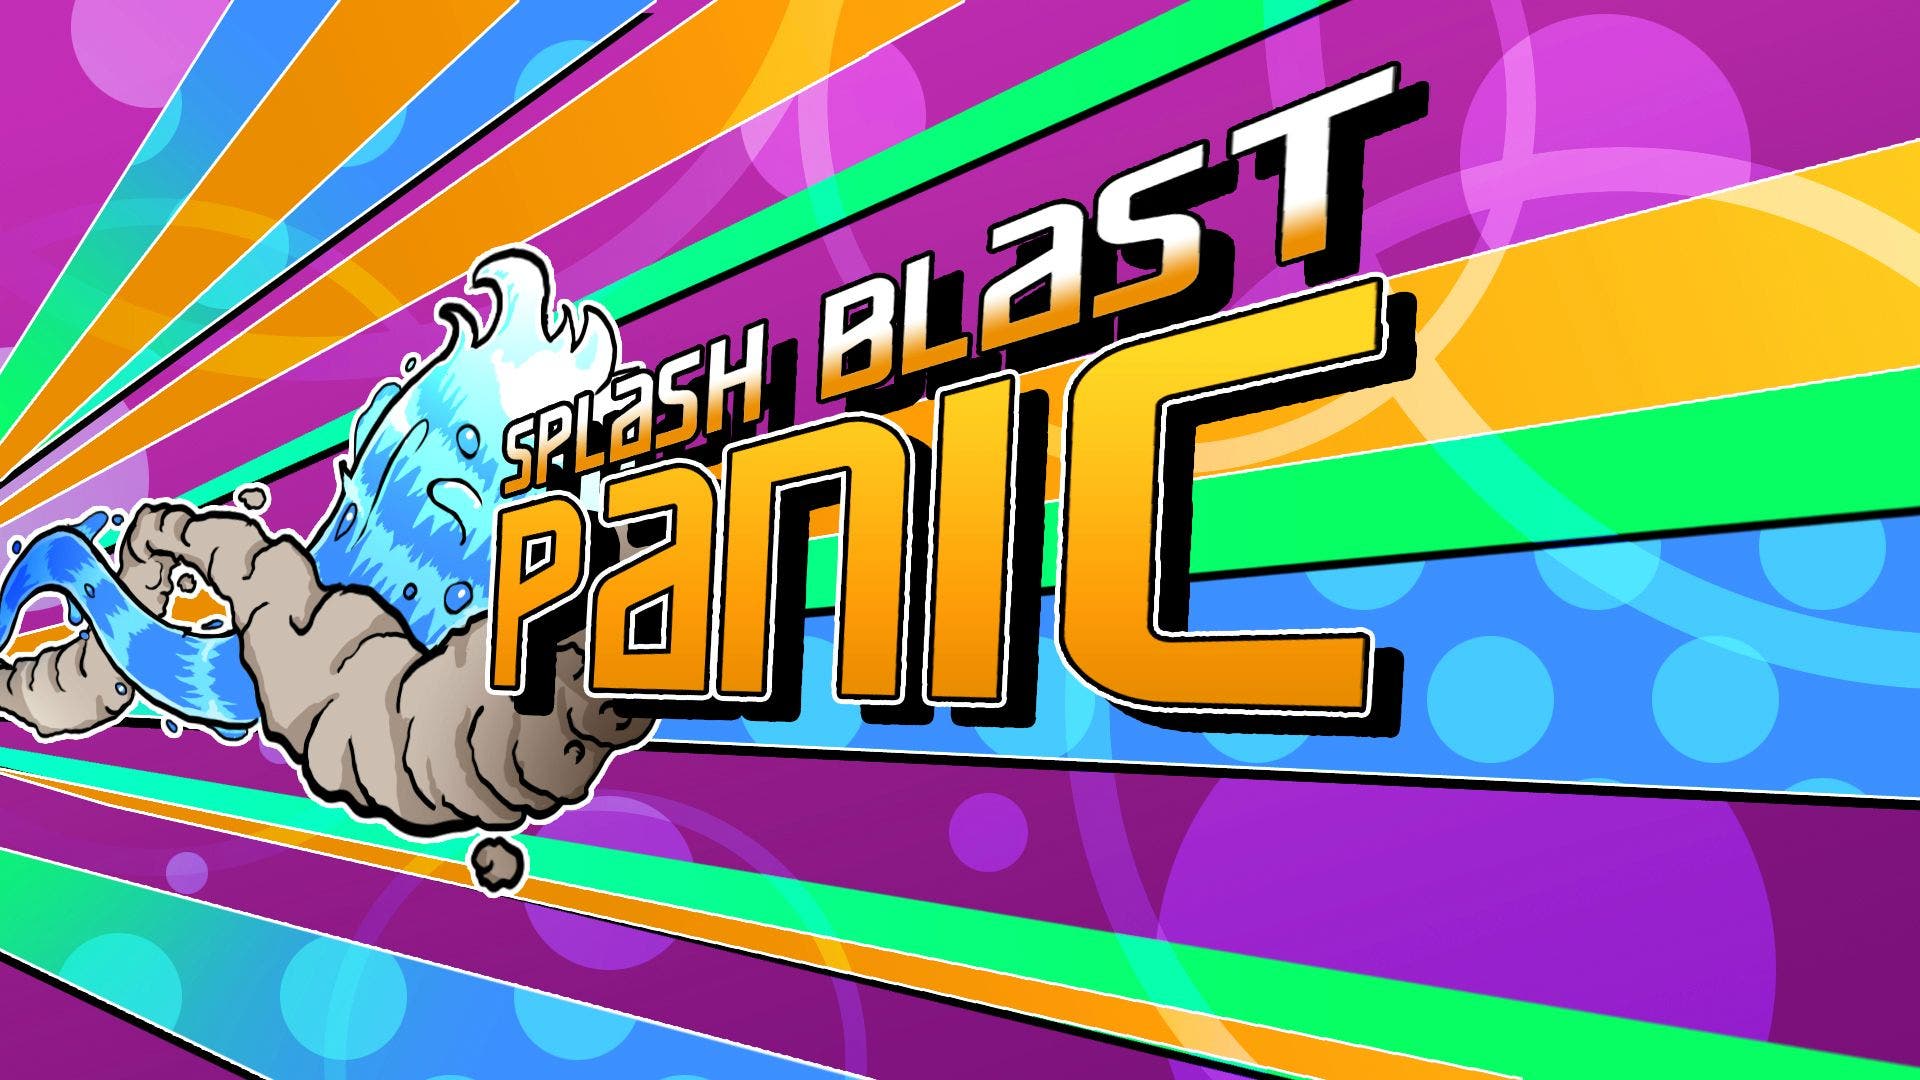 Splash Blast Panic llegará a Nintendo Switch distribuido por Digital Smash